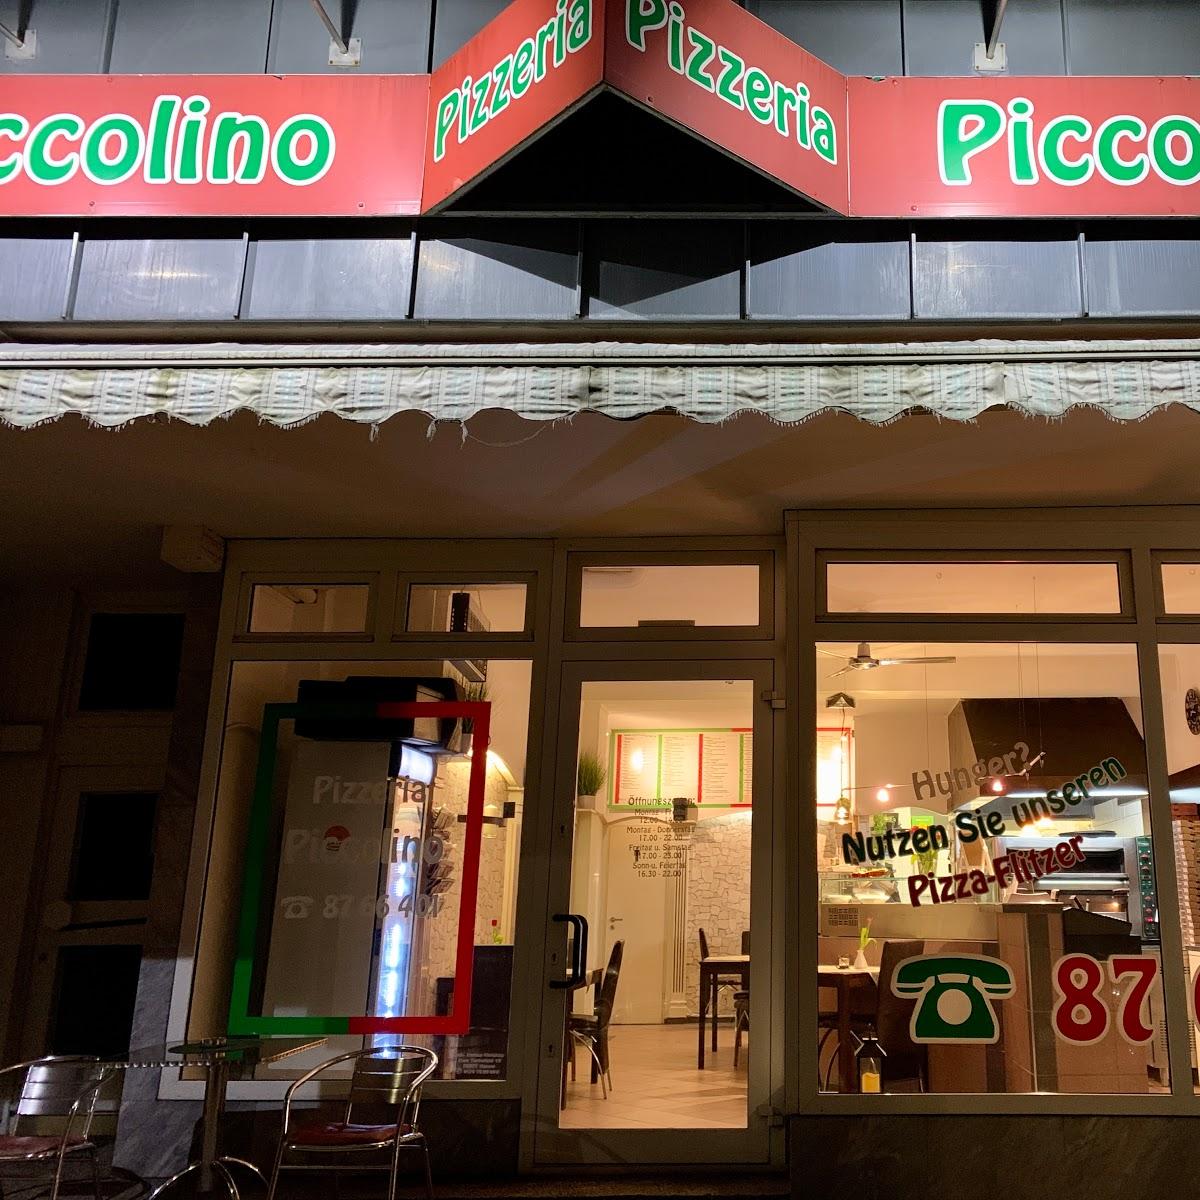 Restaurant "Piccolino Pizzeria" in Hamm